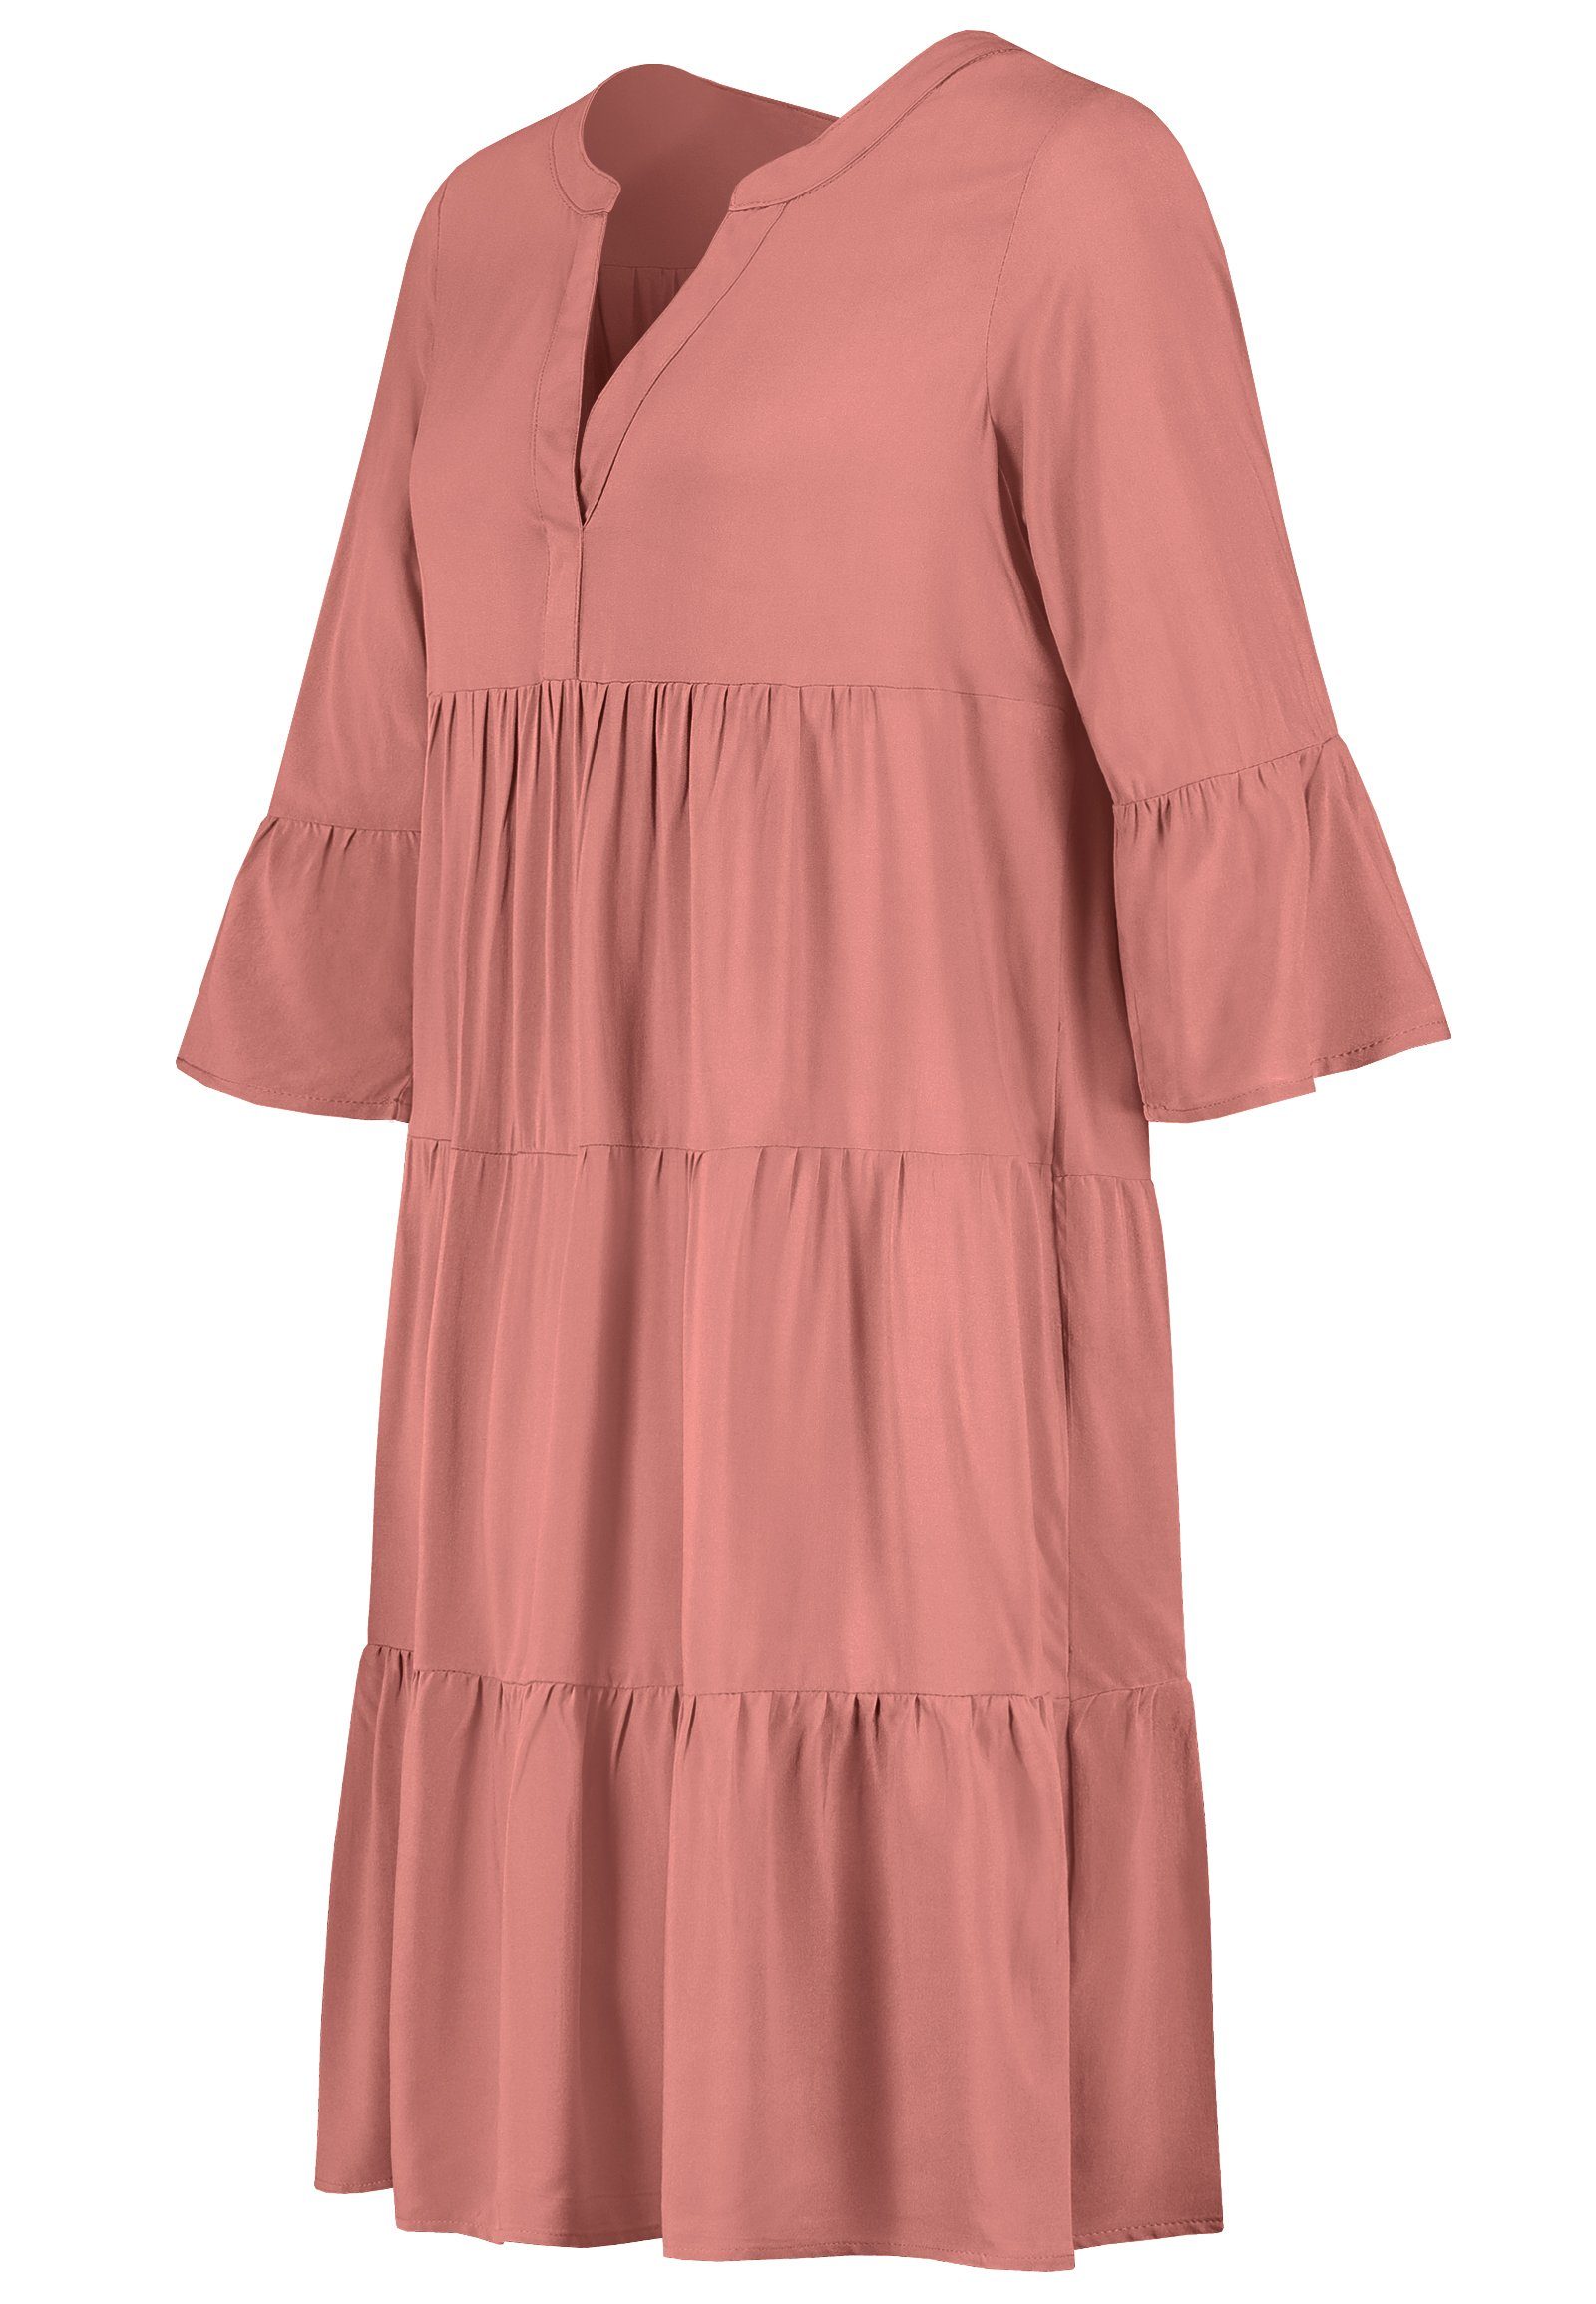 SUBLEVEL Strandkleid Kleid 100% Sublevel Viskose Rosa Strandkleid MIT Damen Sommerkleid VOLANTS